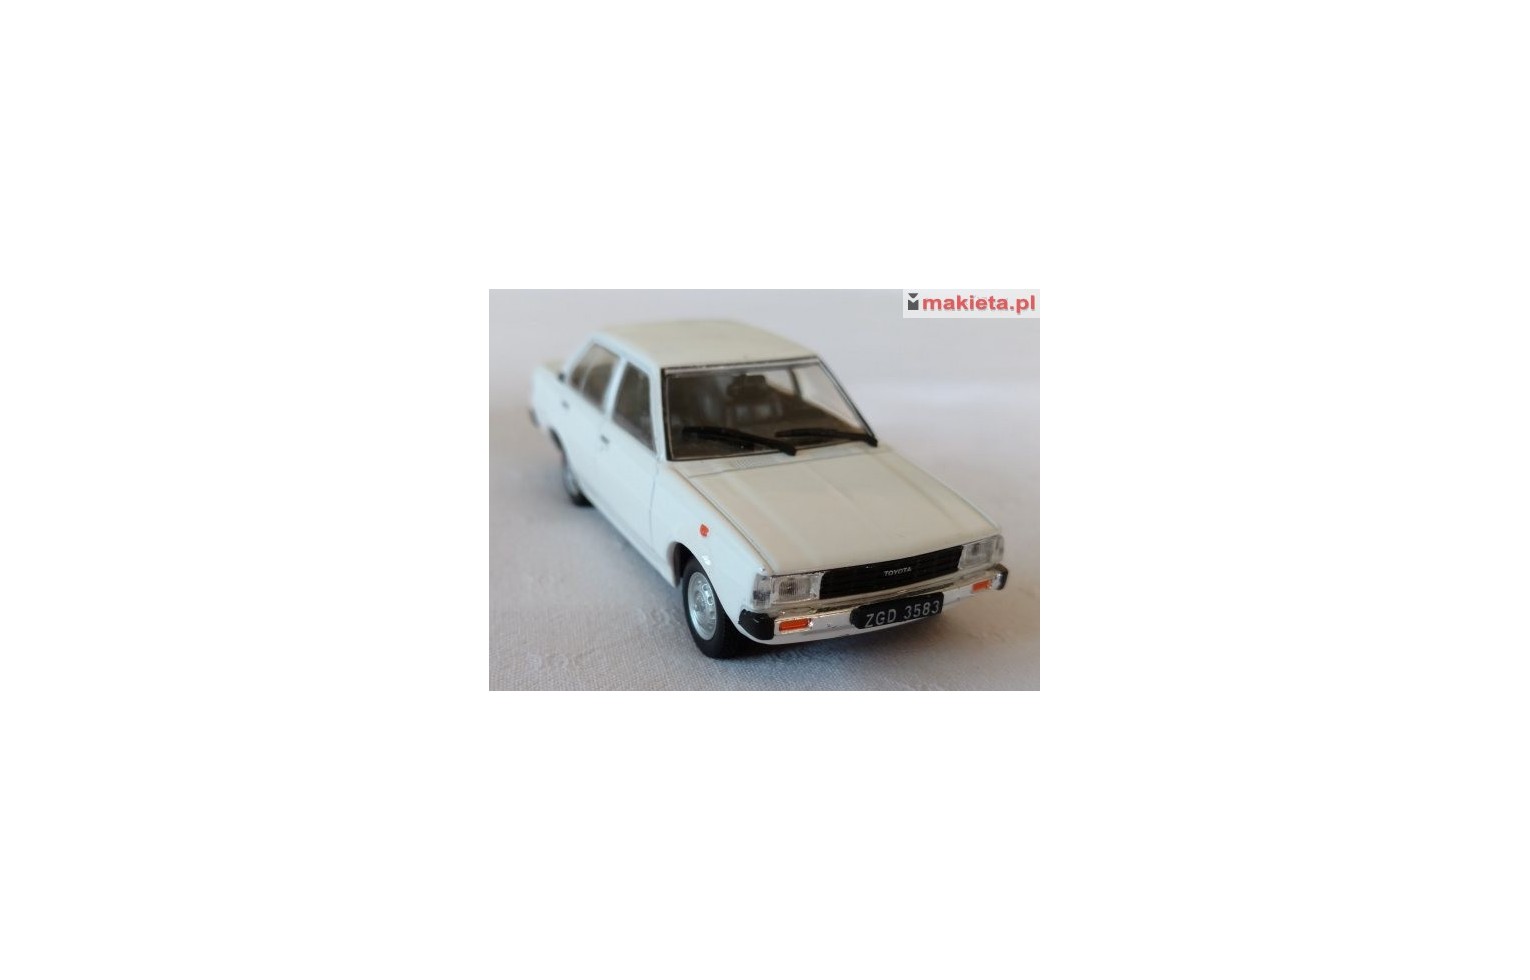 -KOMIS-, Toyota Corolla E70, model metalowy, skala 1:43.